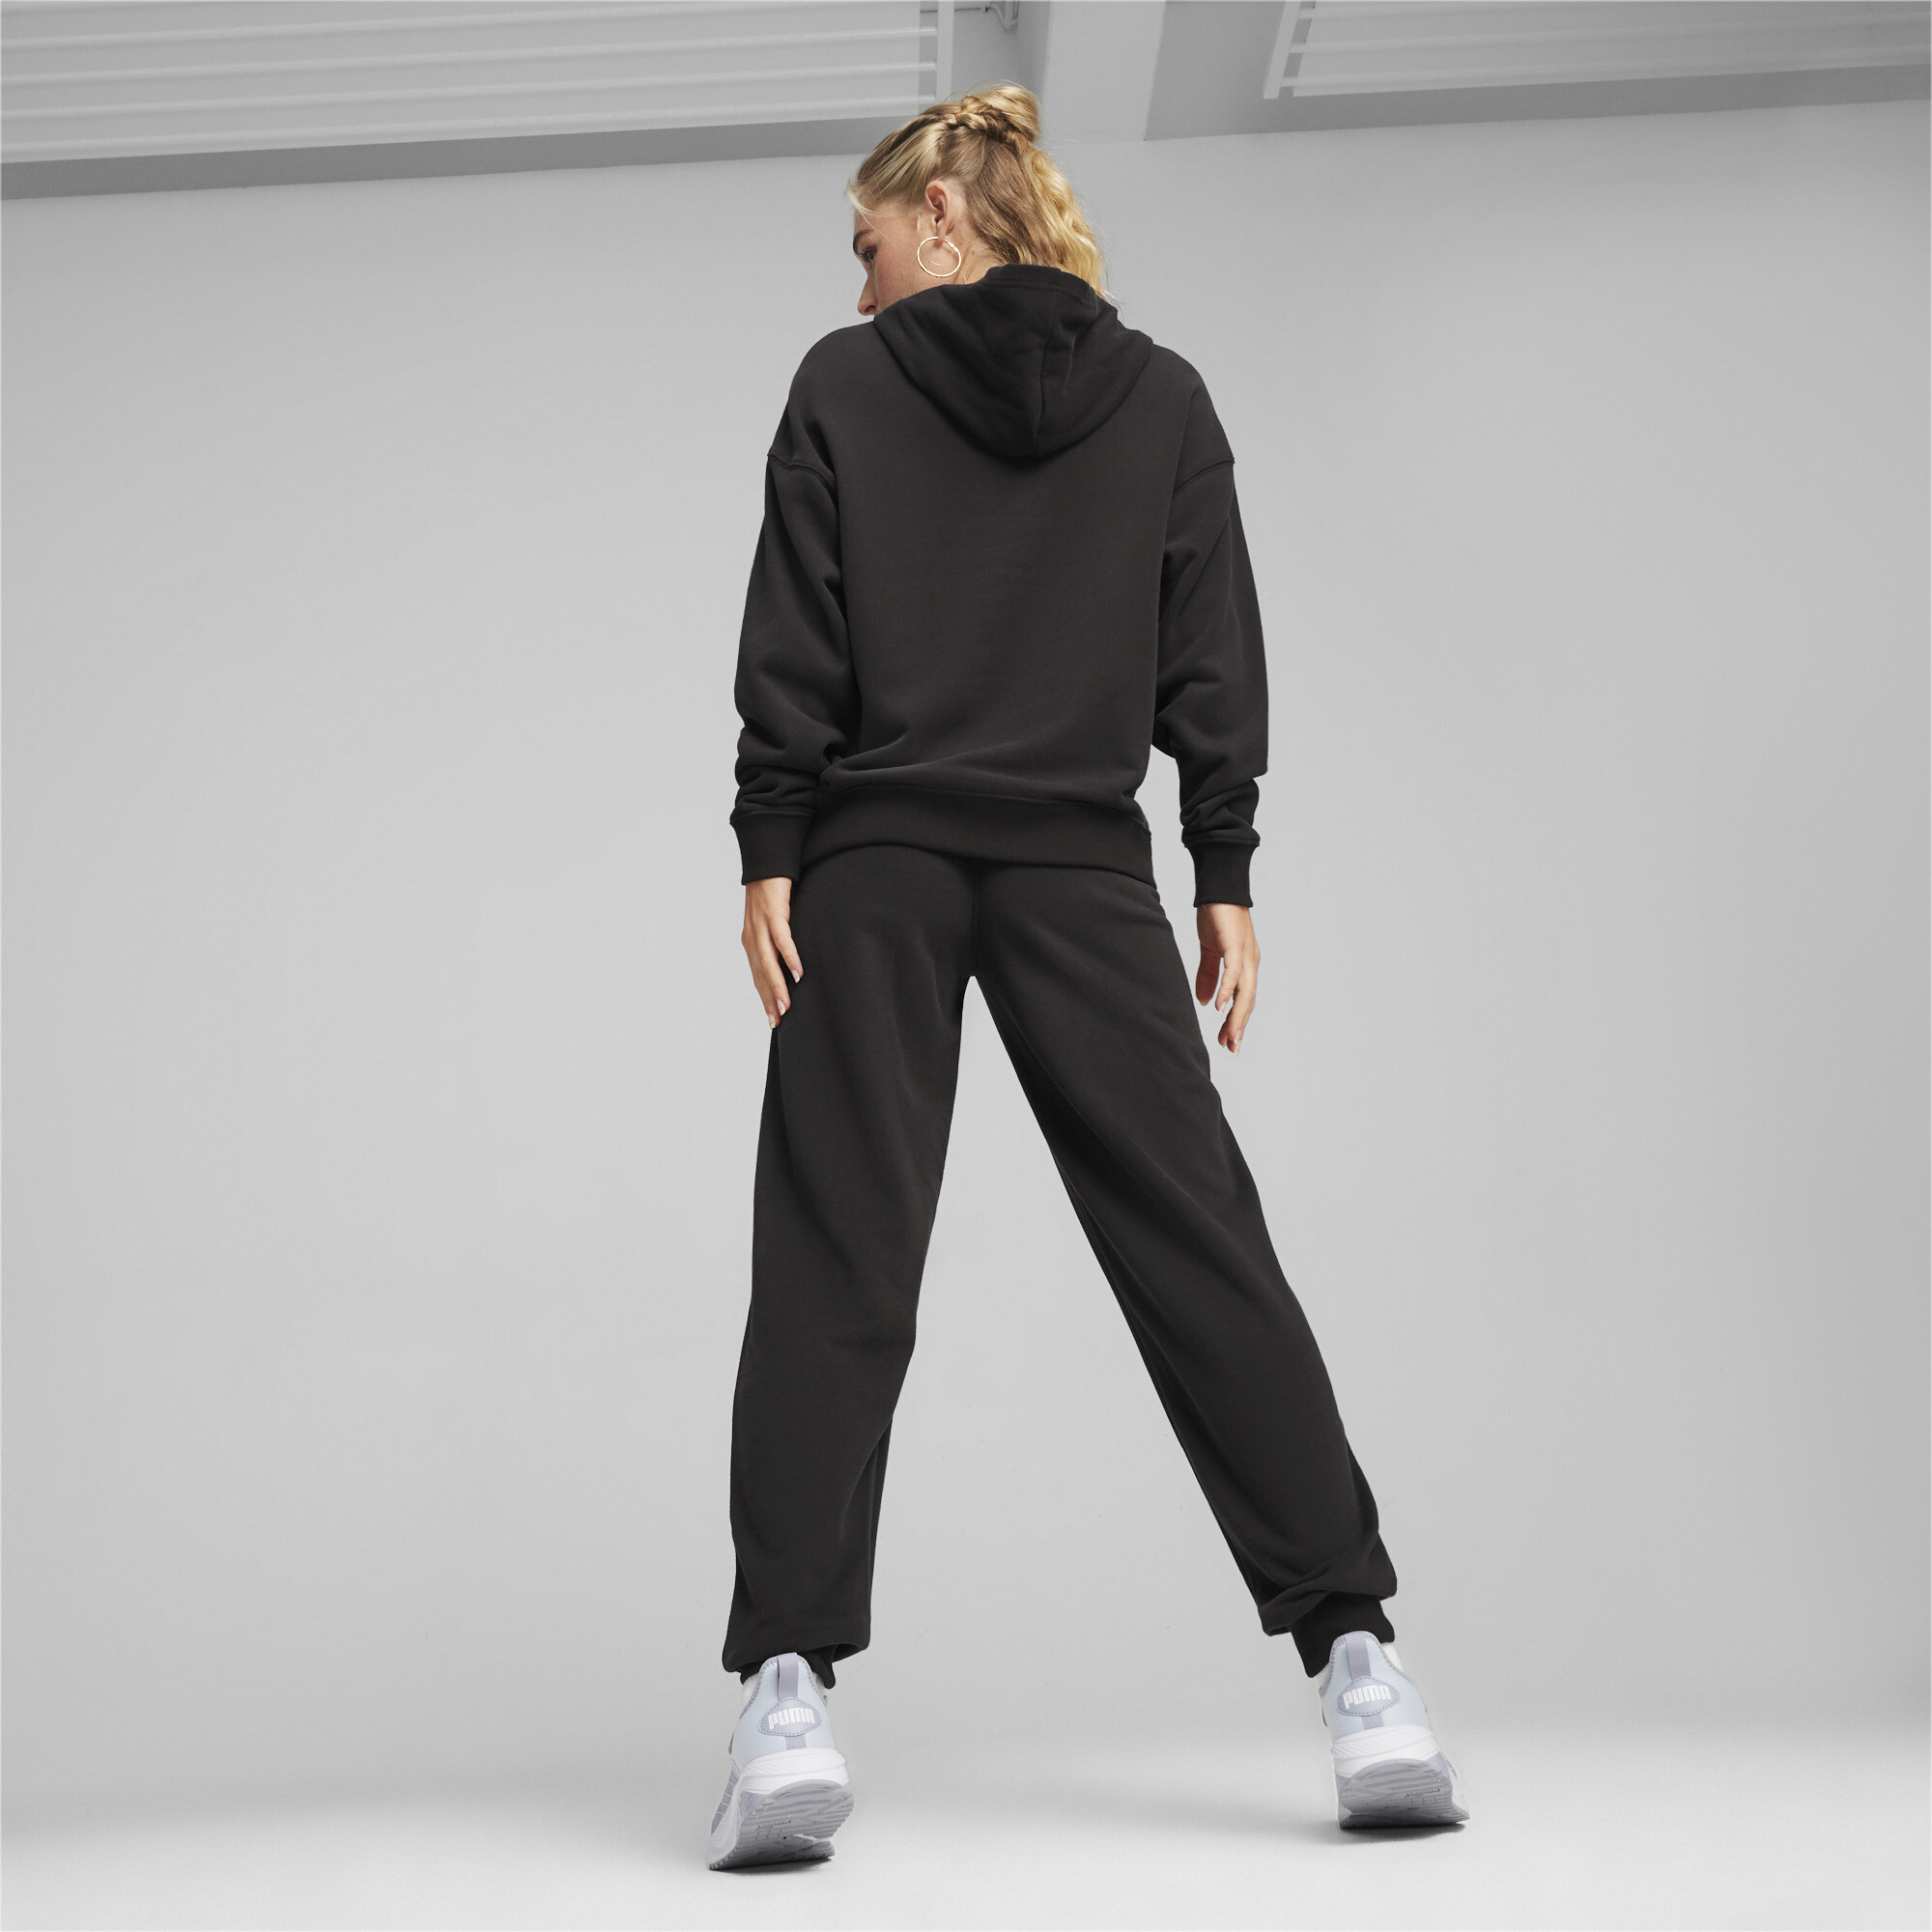 Women's Puma Loungewear's Track Suit, Black, Size M, Clothing